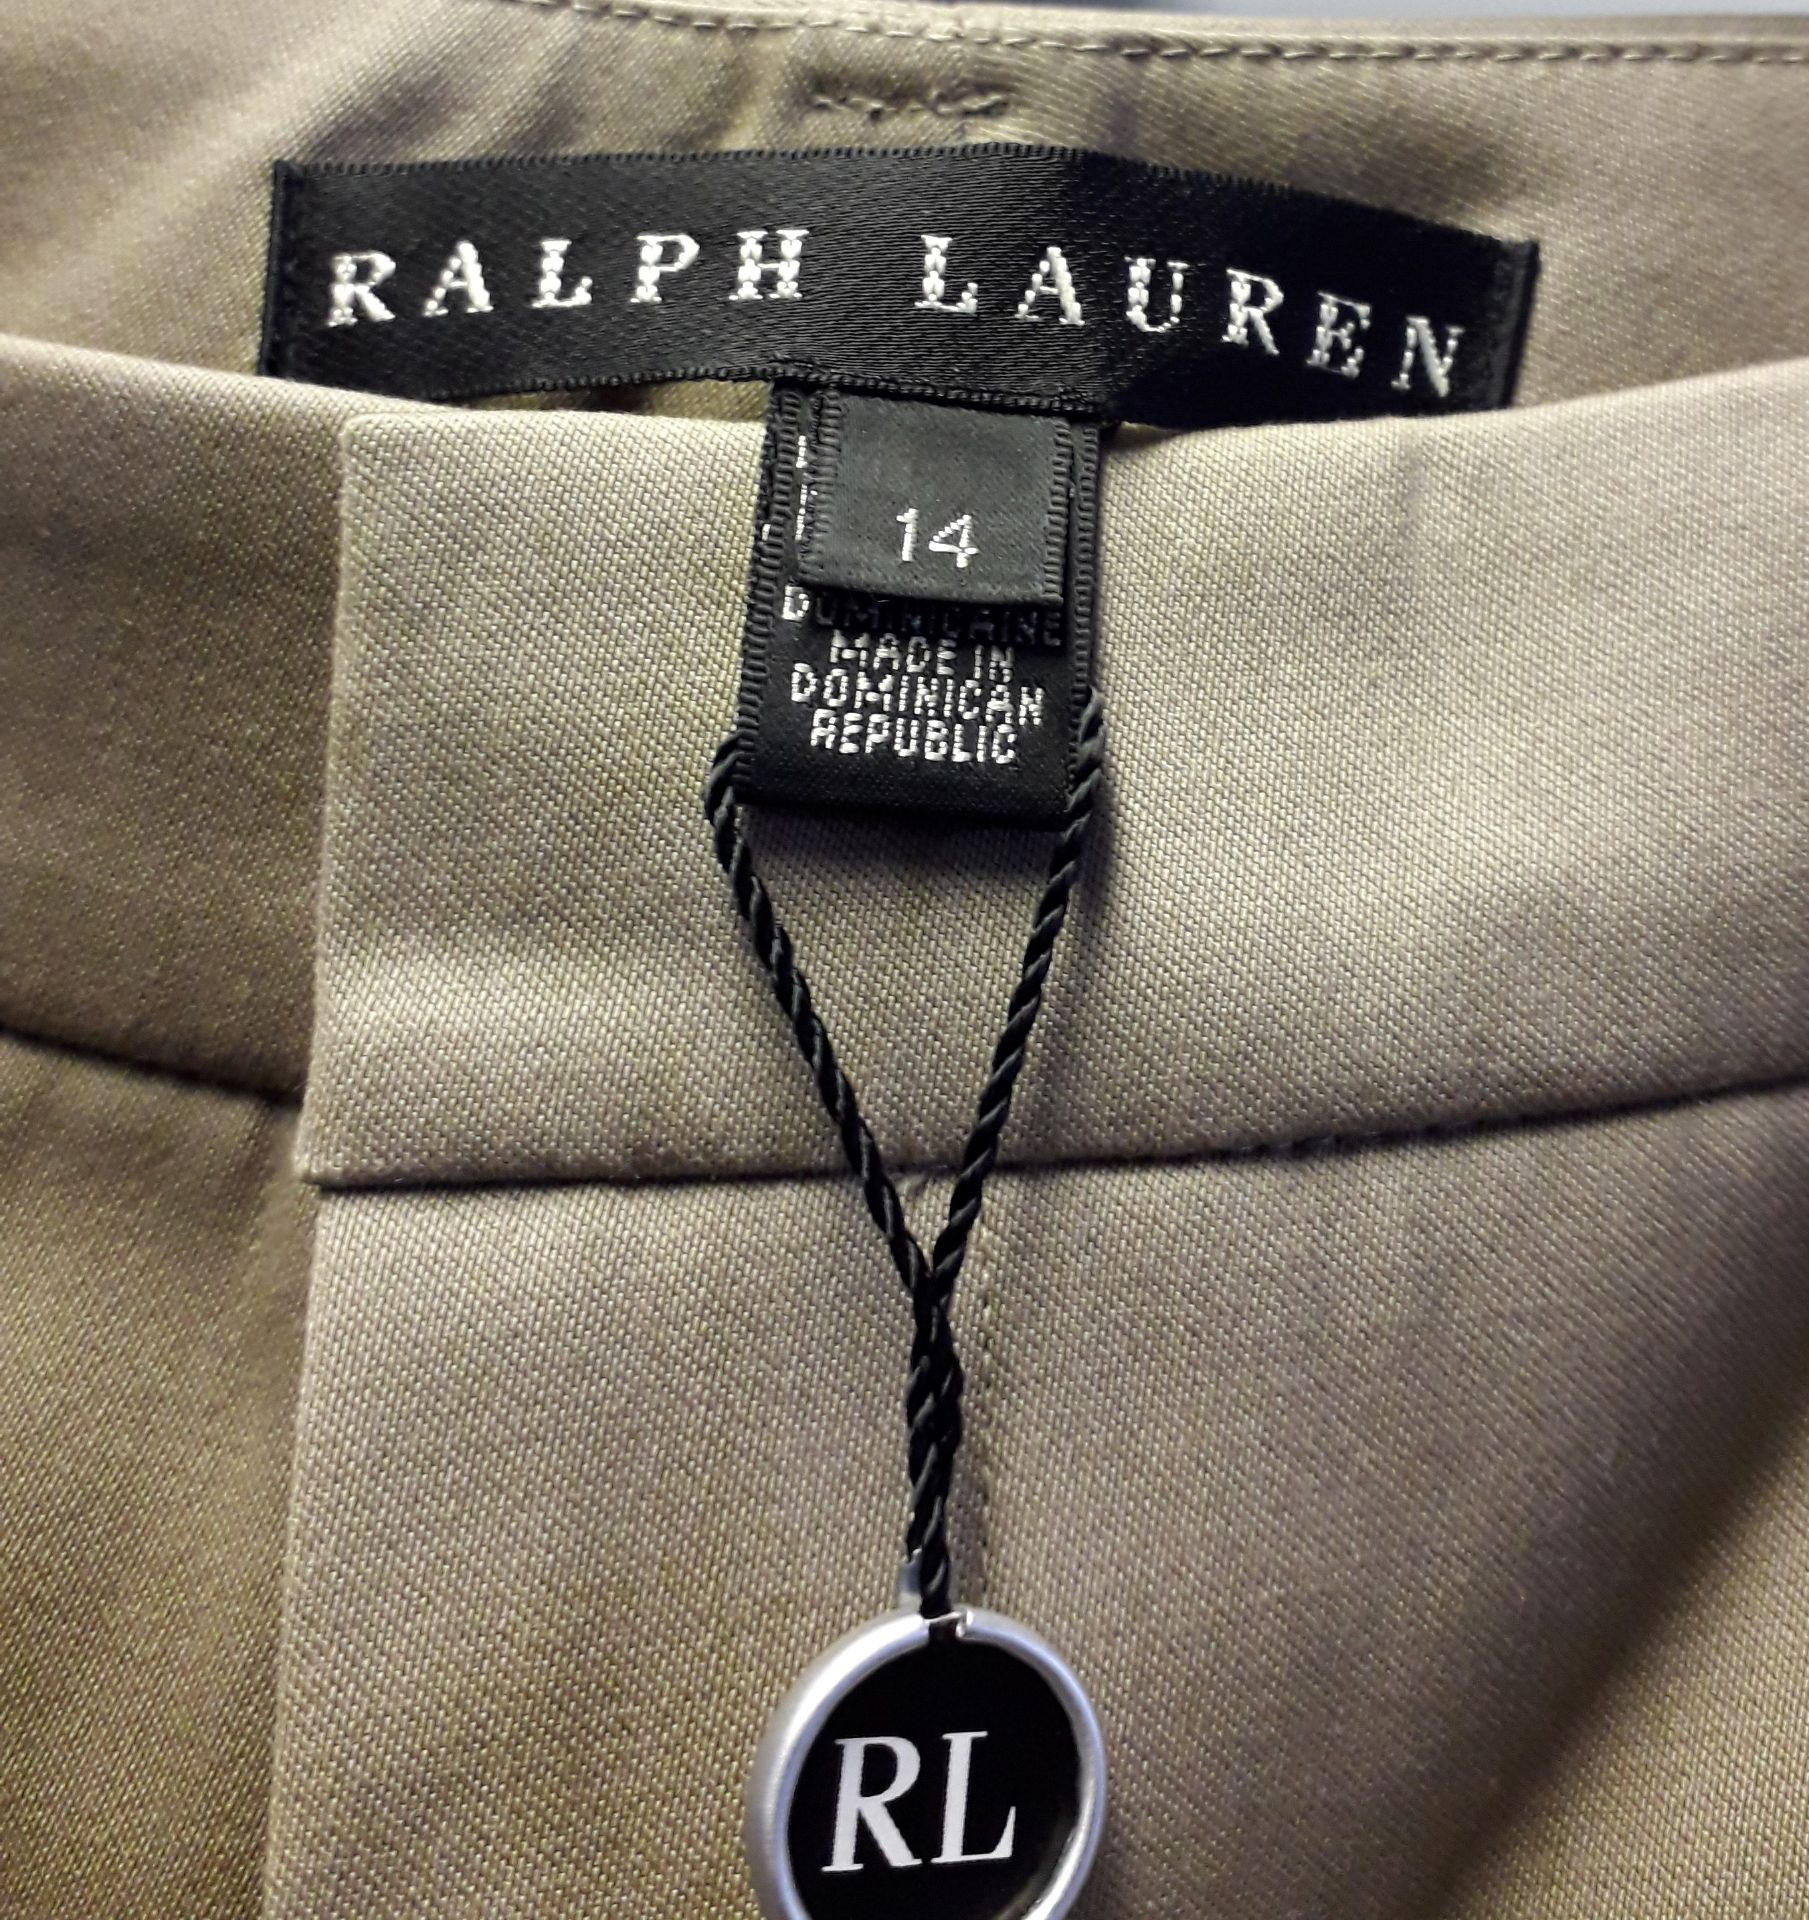 1 x Ralph Lauren Beige Heidi Trousers - Size: 14 - Material: 58% Wool, 40% Cotton, 2% Elastane - - Image 5 of 5